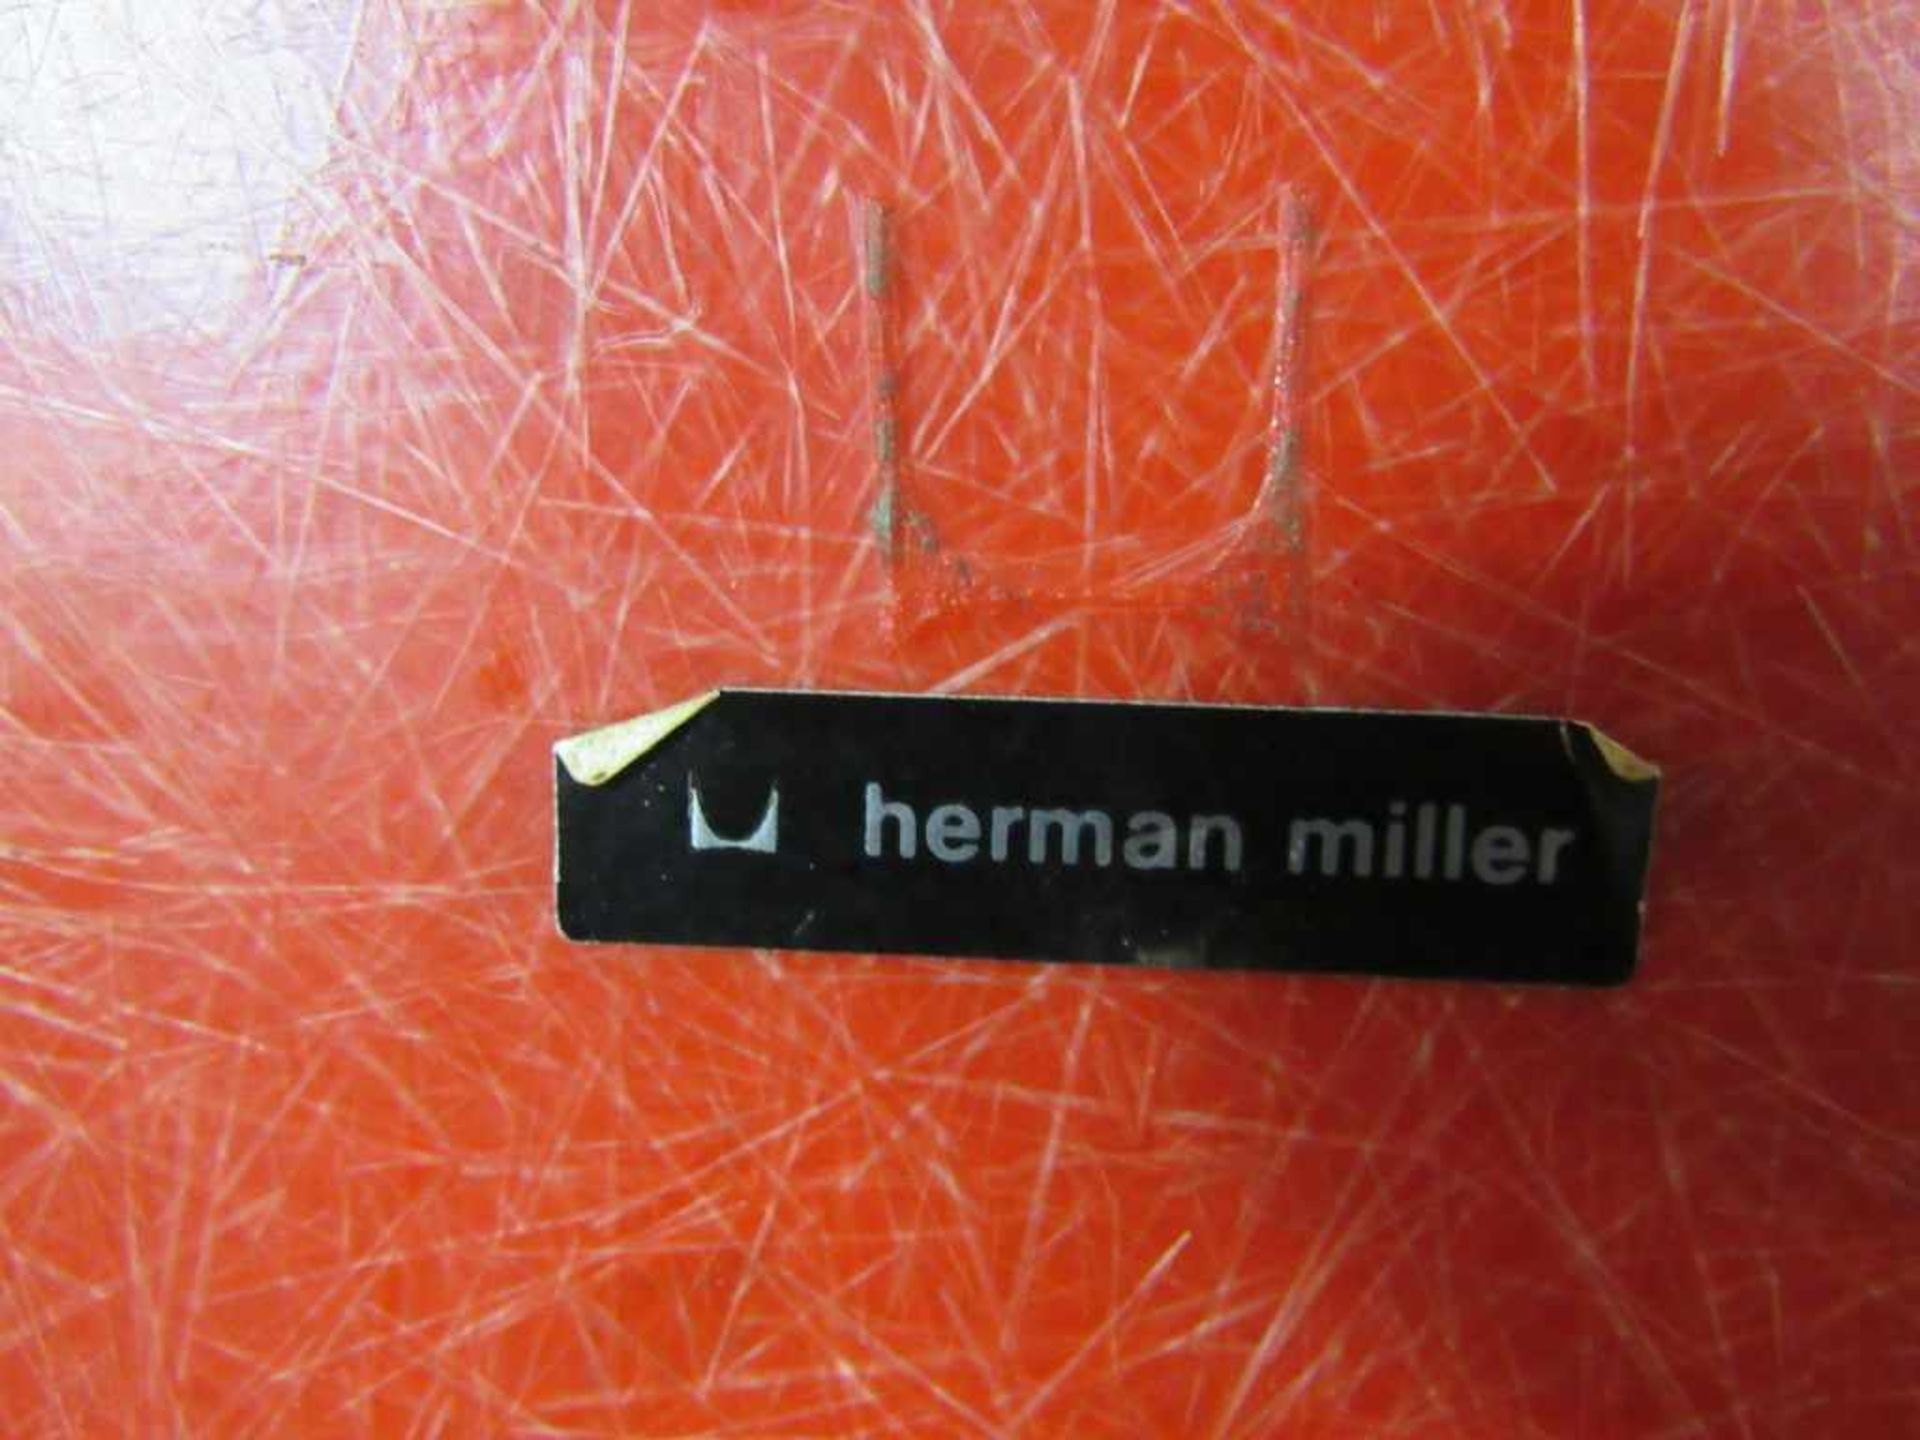 Stuhl Hermann Miller Space Age rote Fiberglasschale bezogen 60er Jahre Eams gelabelt auf La Fonda - Image 6 of 6